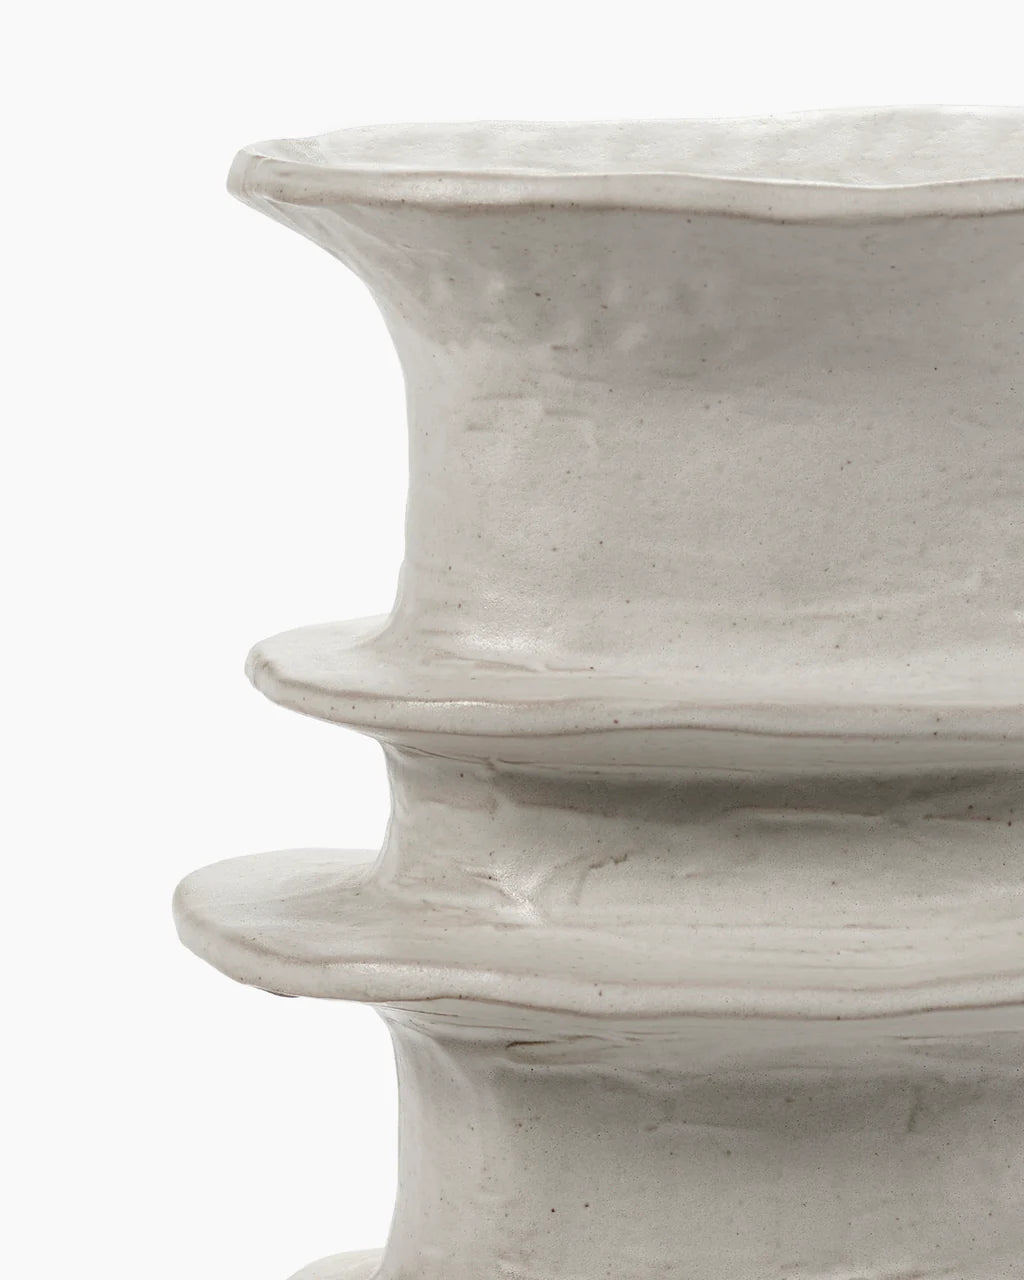 Off White Billy Vase with Ridges in Medium Size